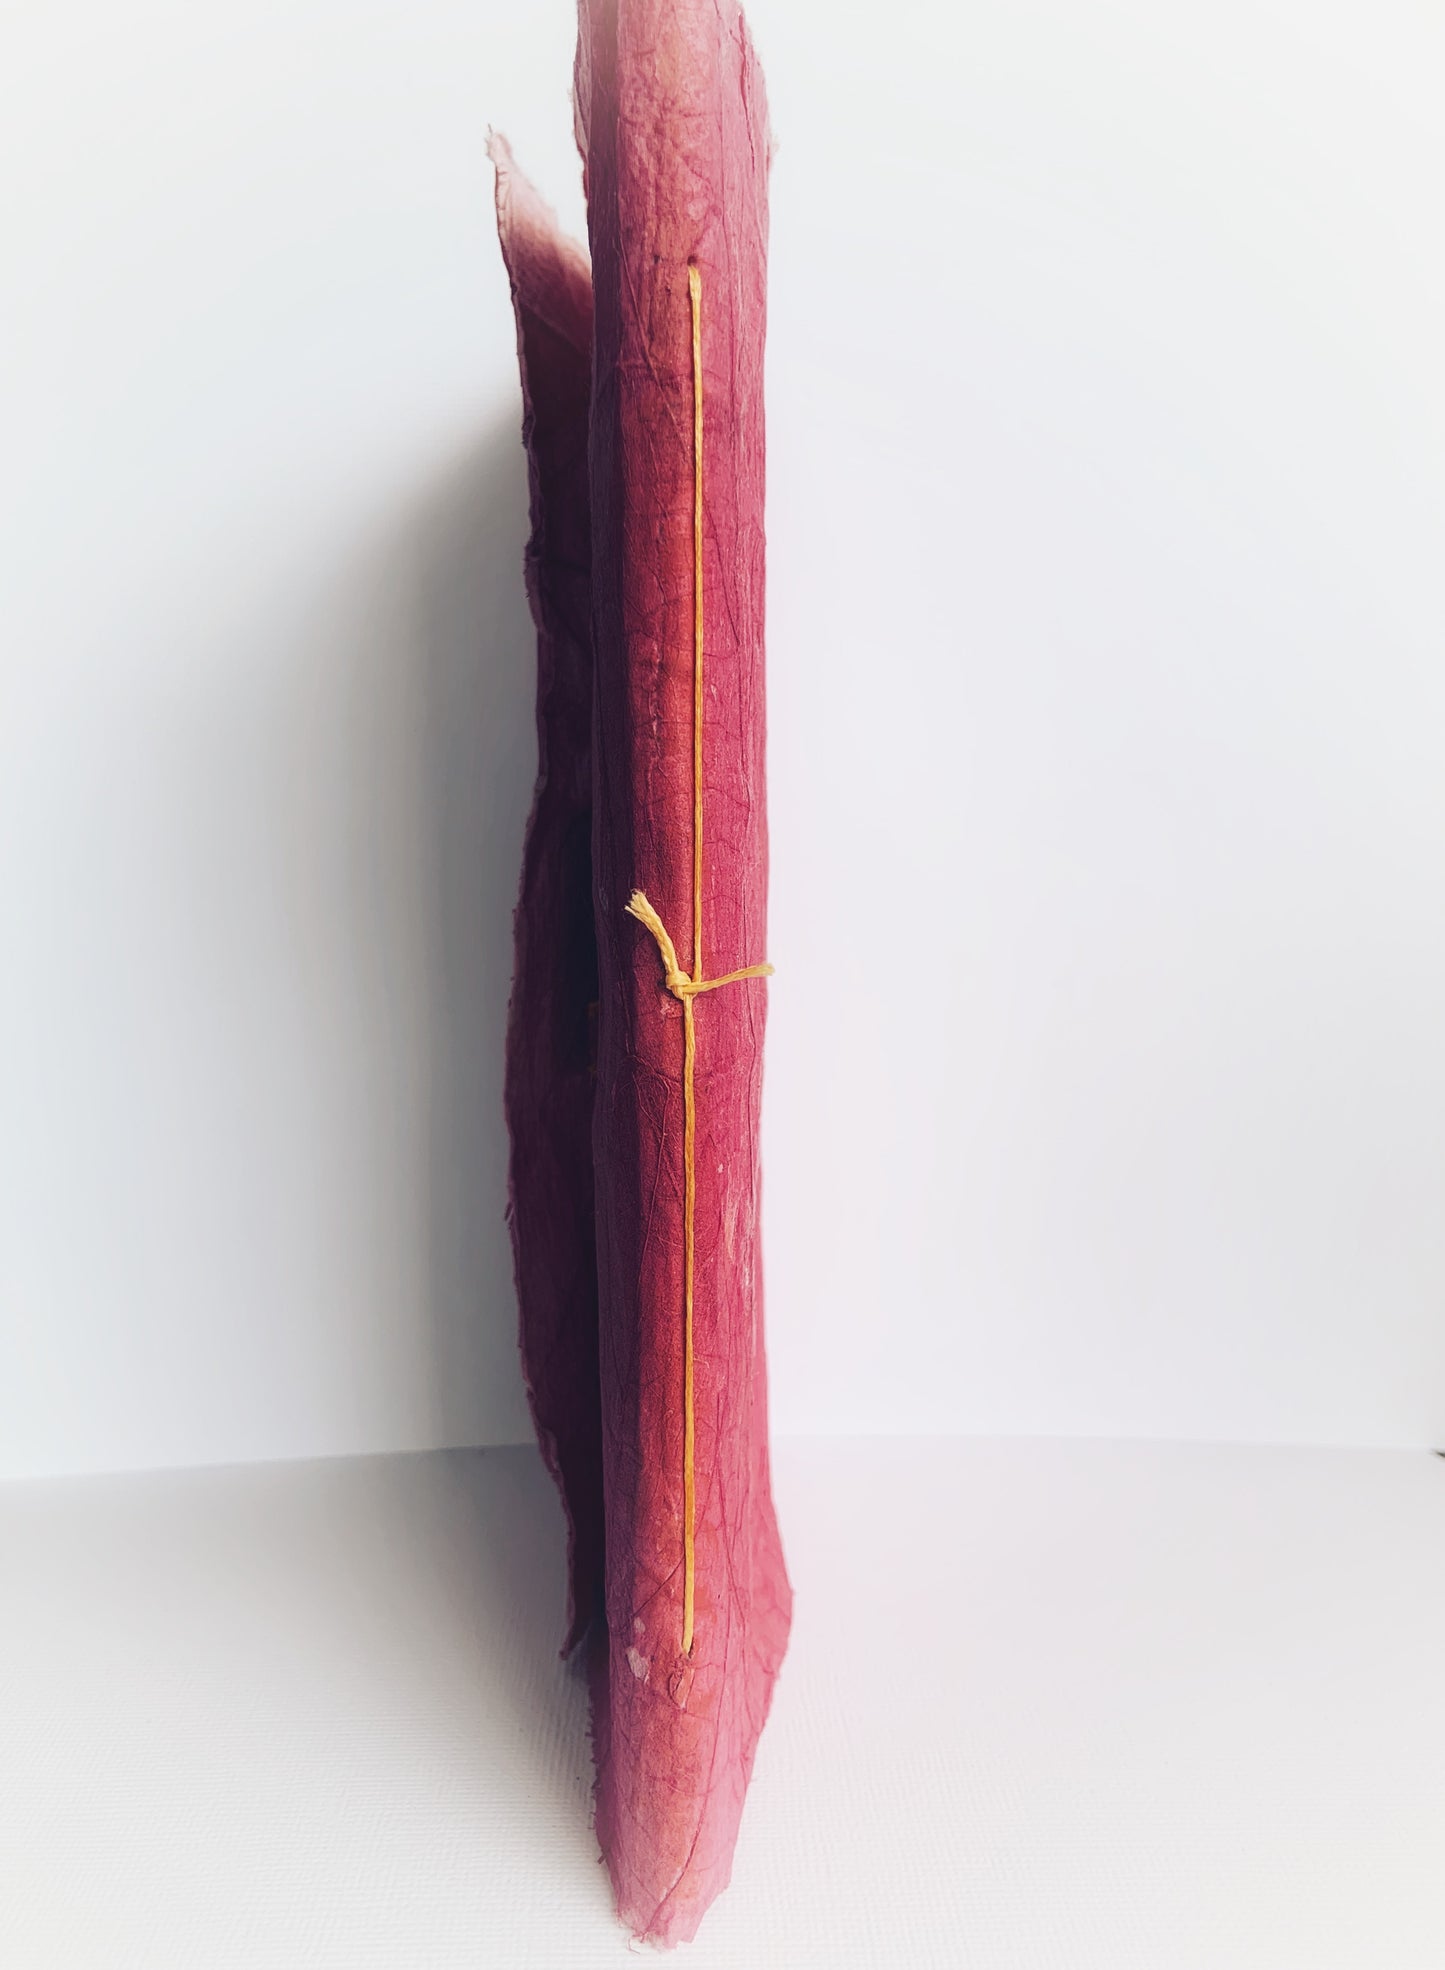 Spine of handmade journal showing orange thread on pink handmade paper.